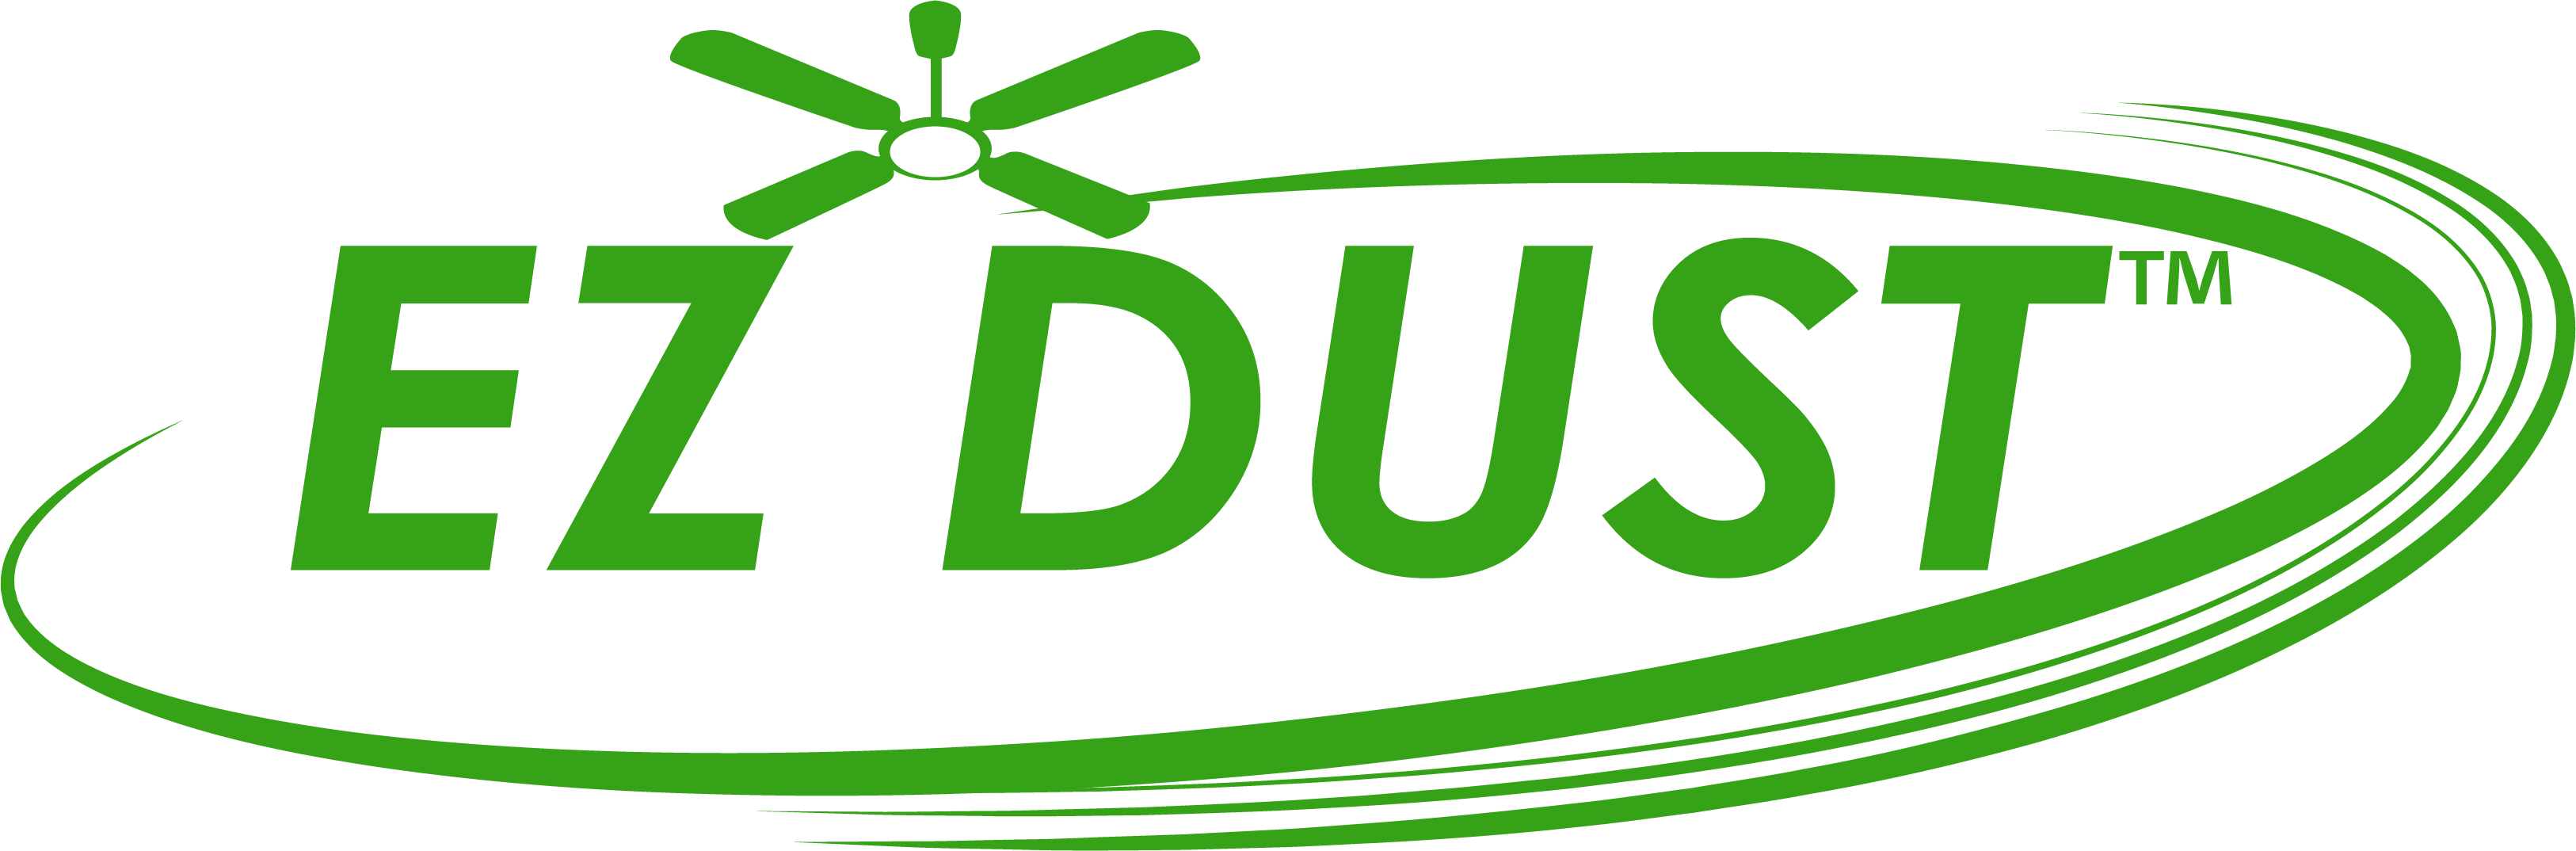 No Dust Spray - Dust (3252x1074)